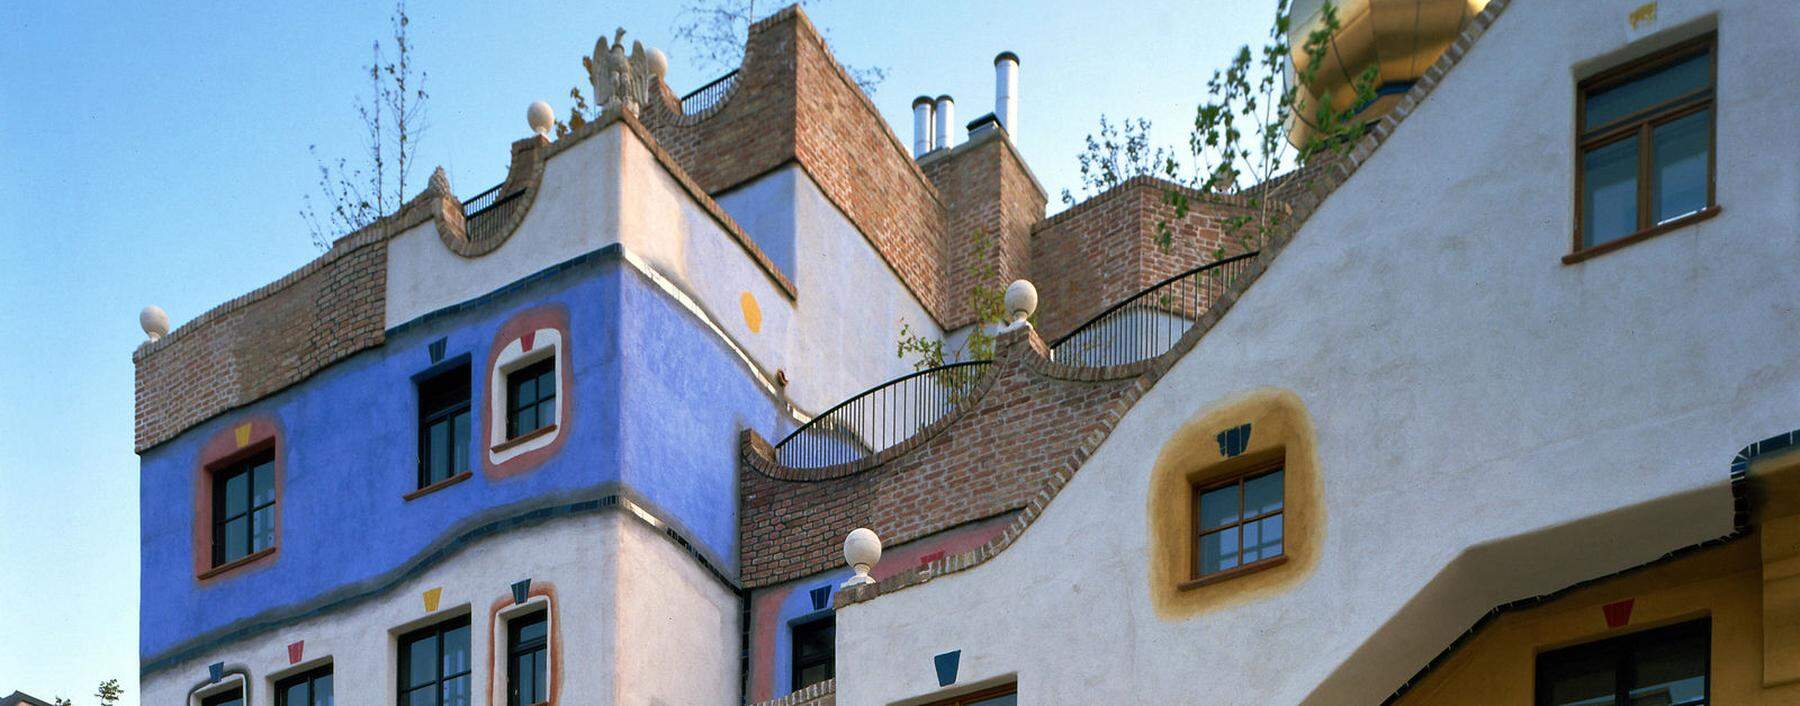 Hundertwasserhaus in der Wiener Kegelgasse, 1985.